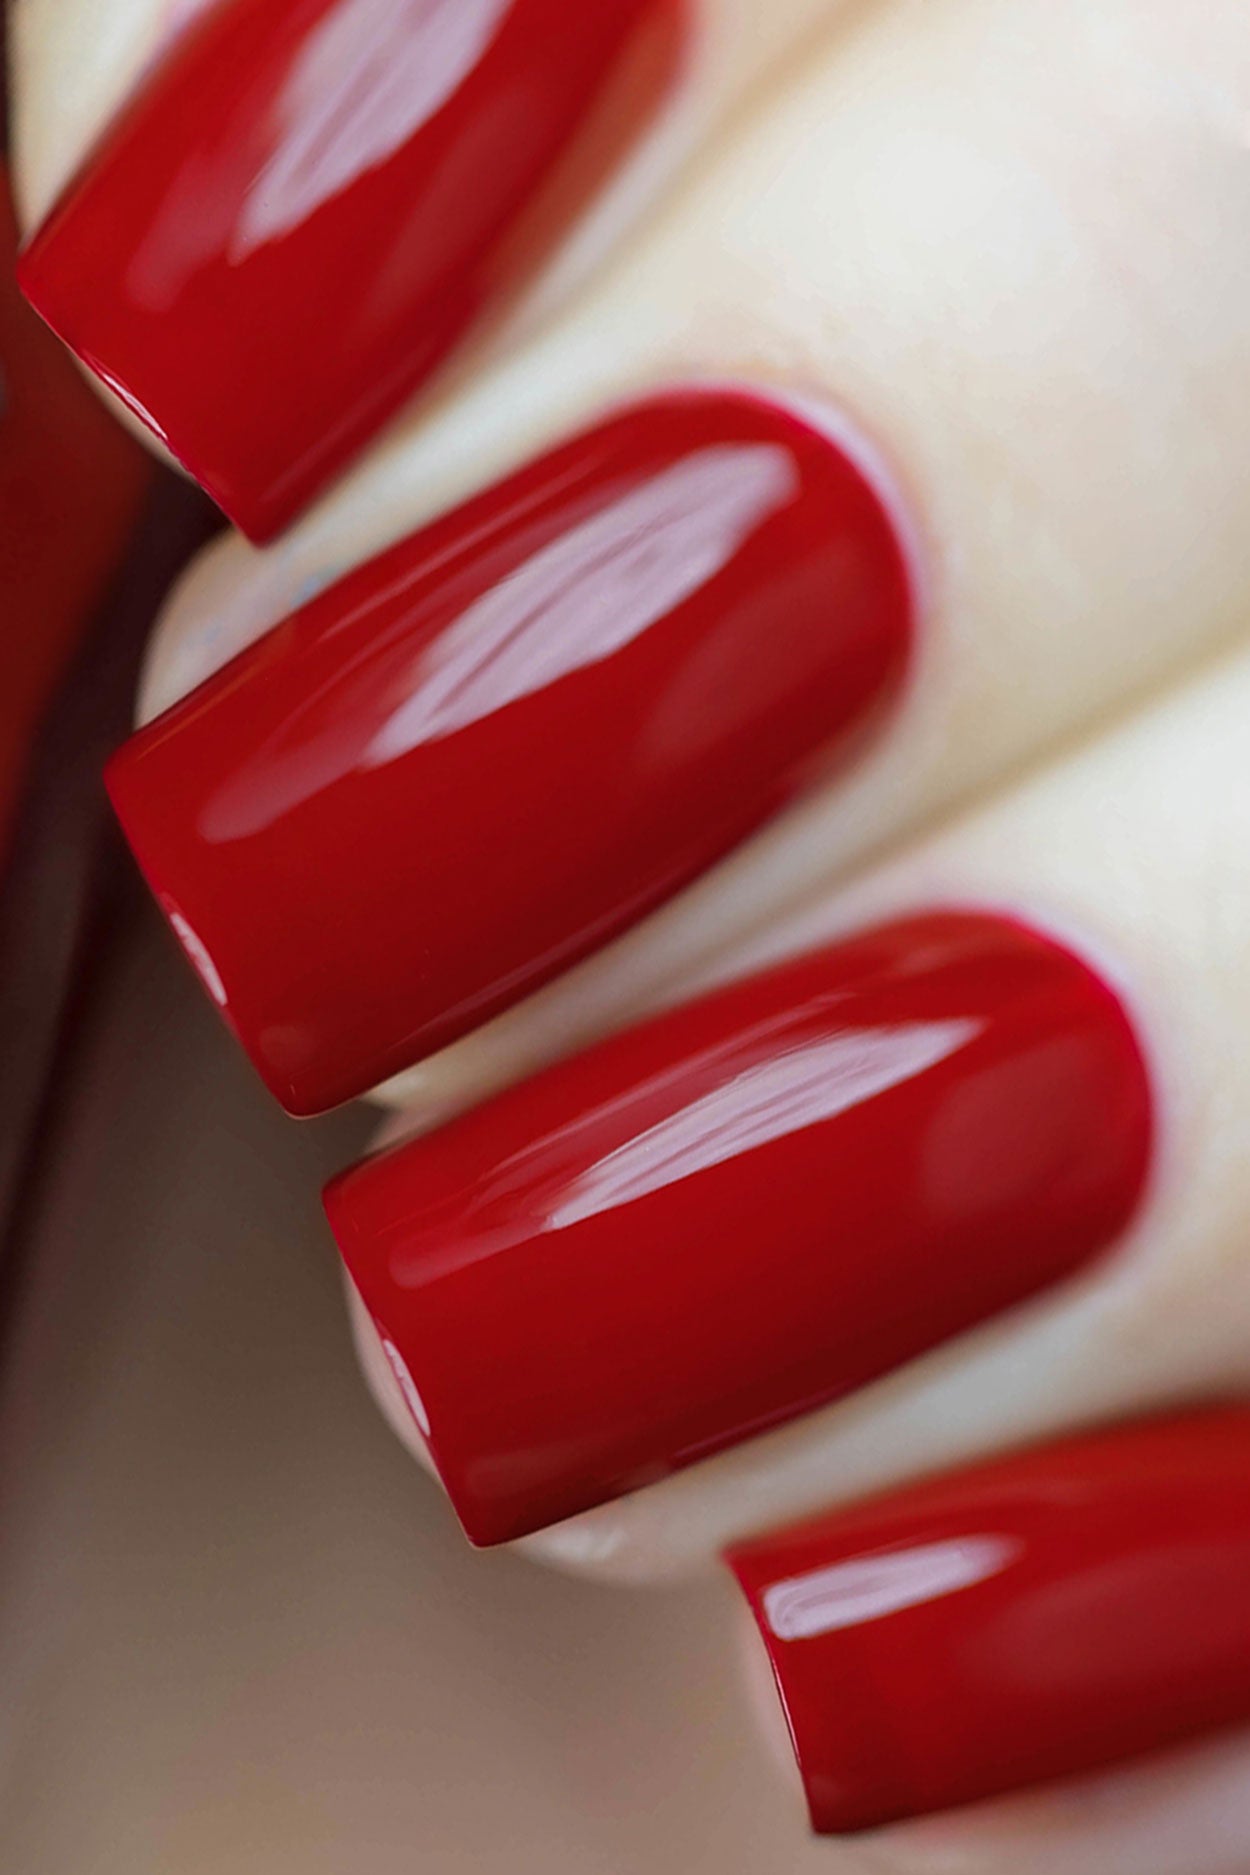 Red Devil Hand Black Nails Stock Photo 98315717 | Shutterstock